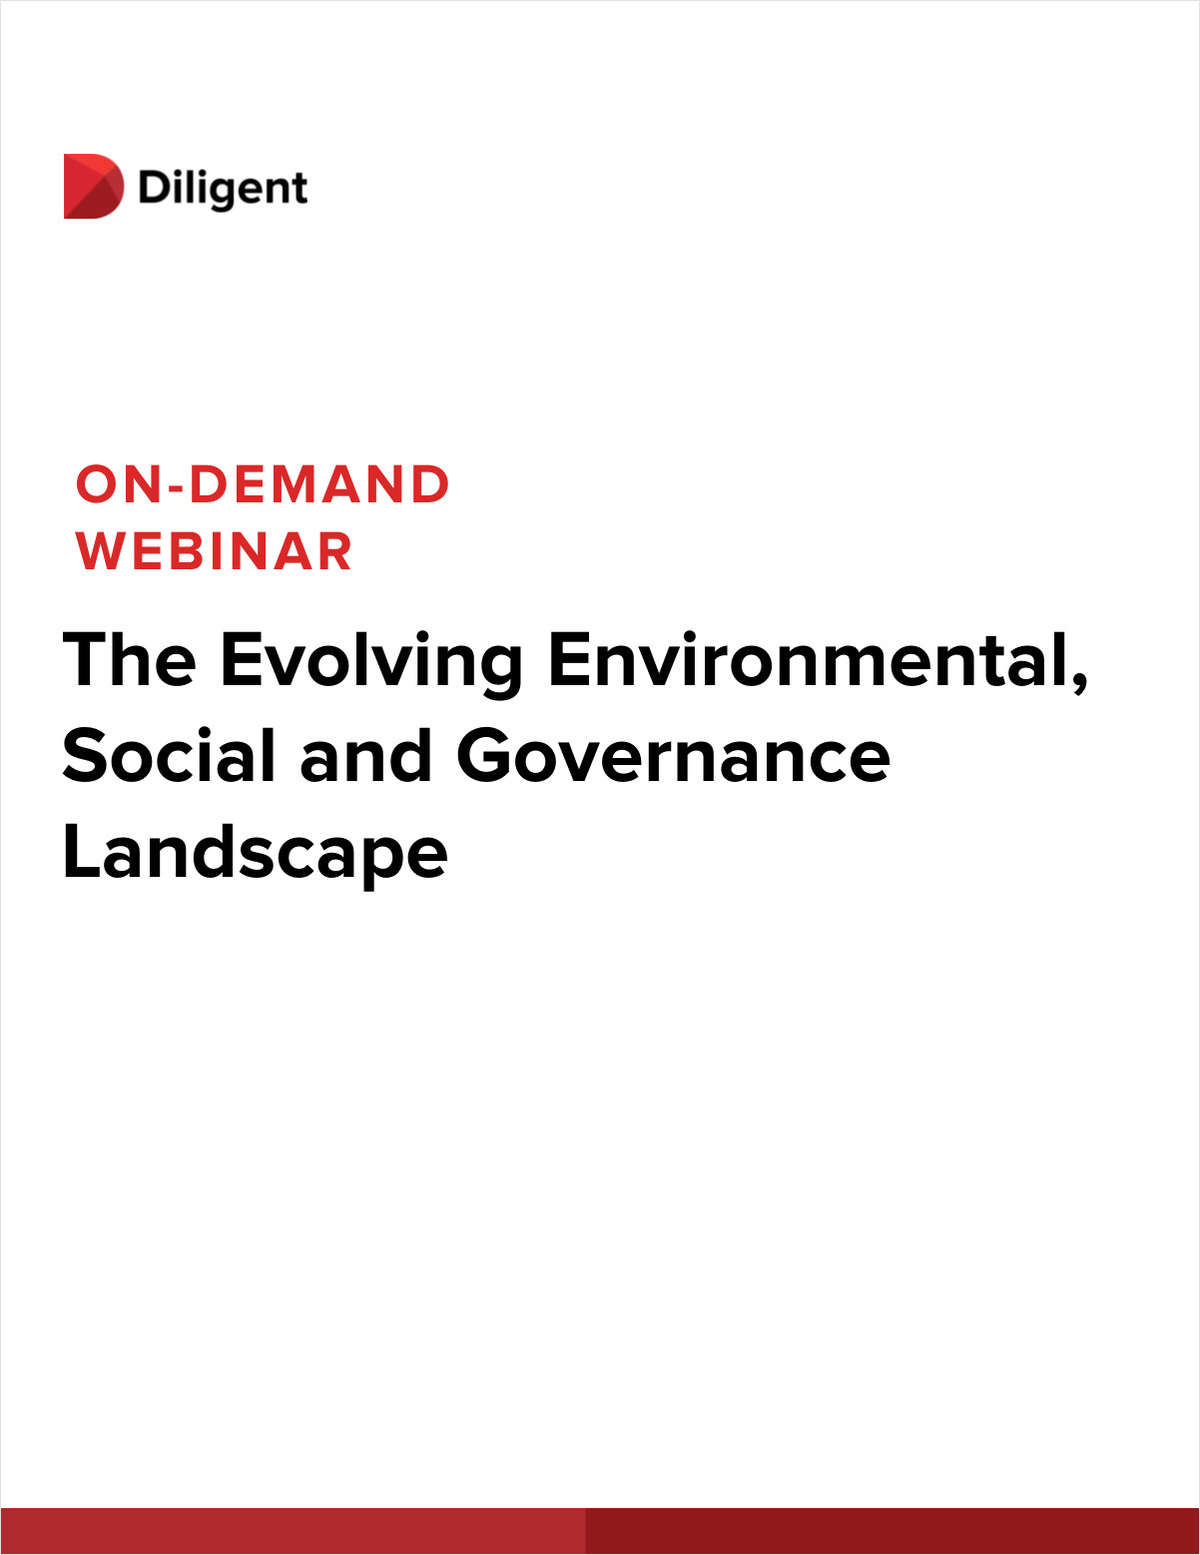 The Evolving Environmental, Social and Governance Landscape